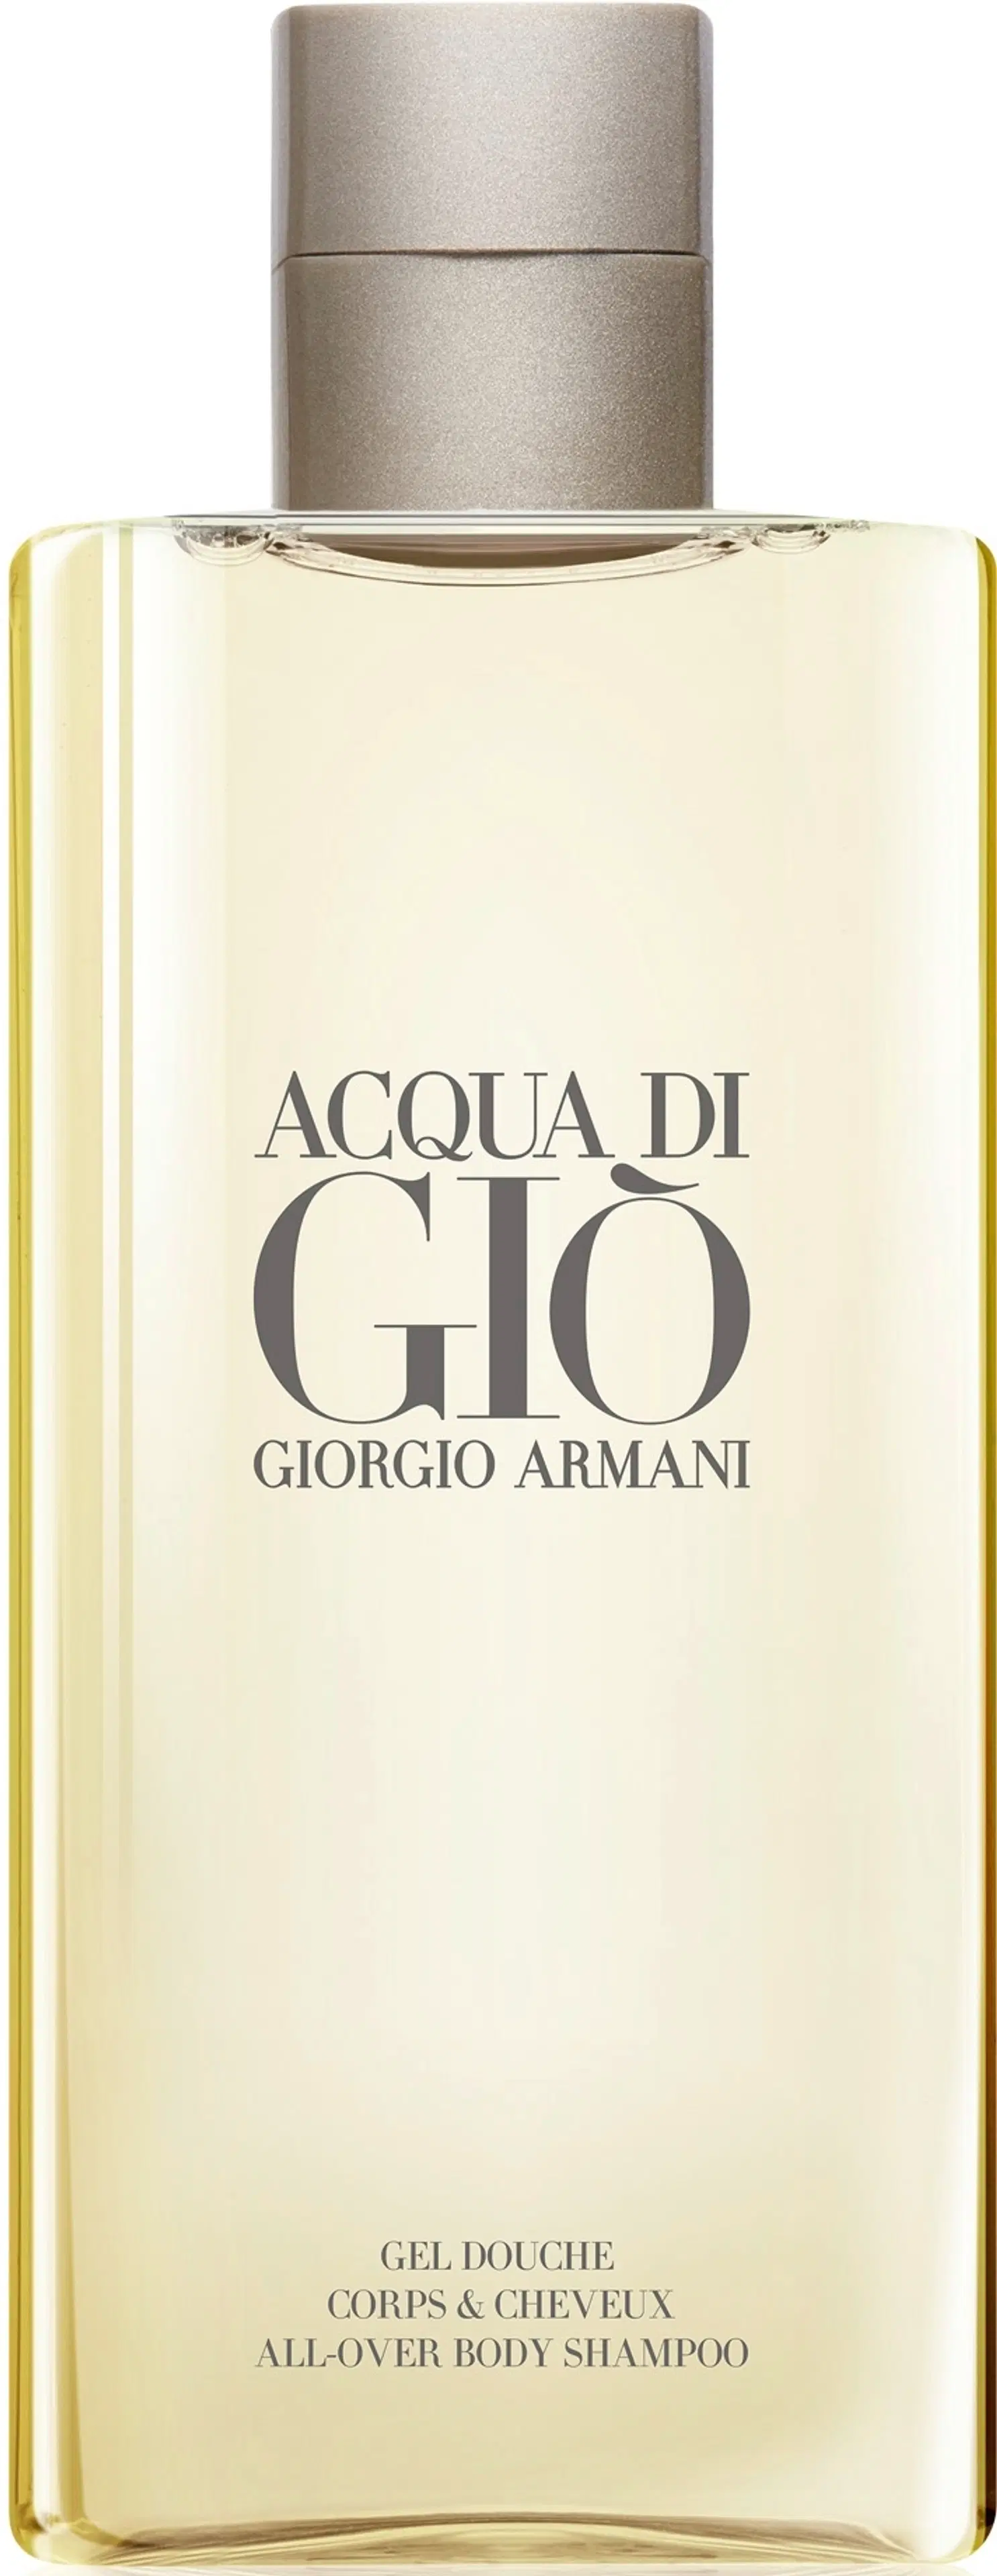 Giorgio Armani  Acqua di Gio Shower Gel suihkugeeli 200 ml